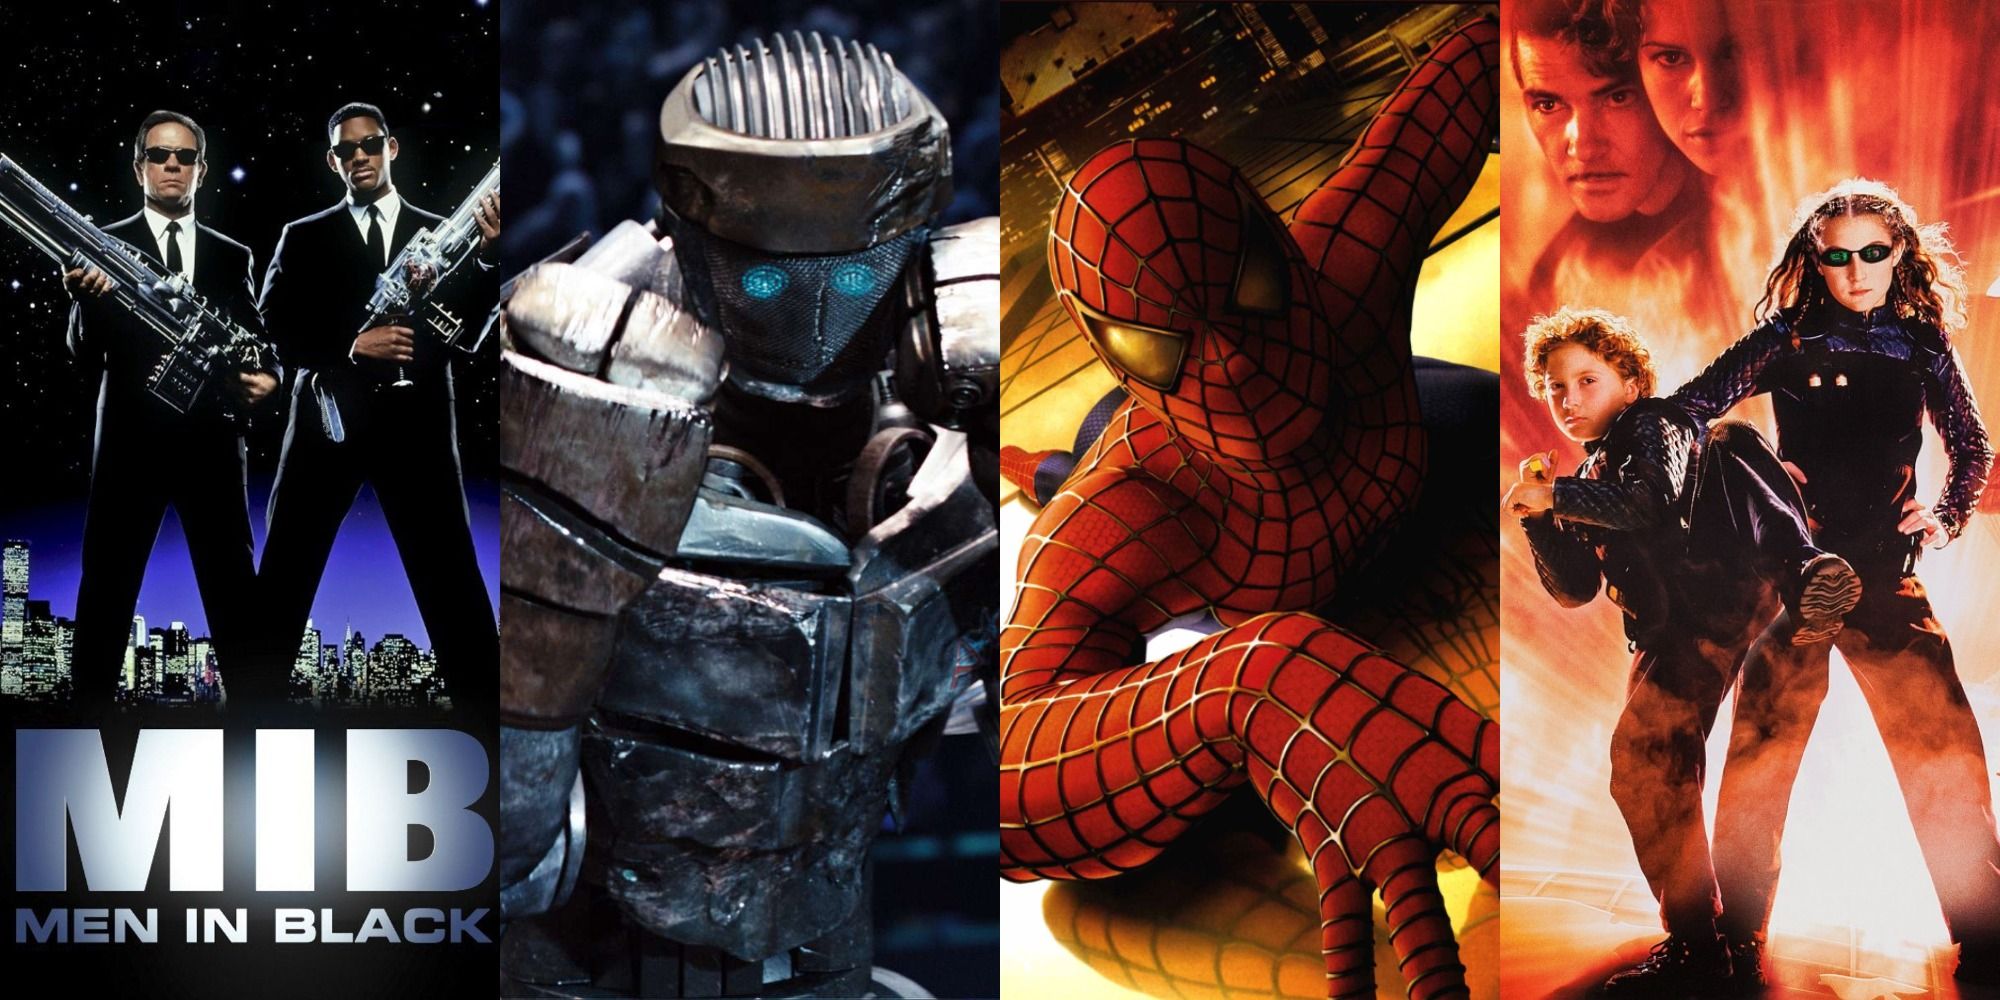 combined images of Spy Kids, Men in Black, Spider-Man, Real Steel